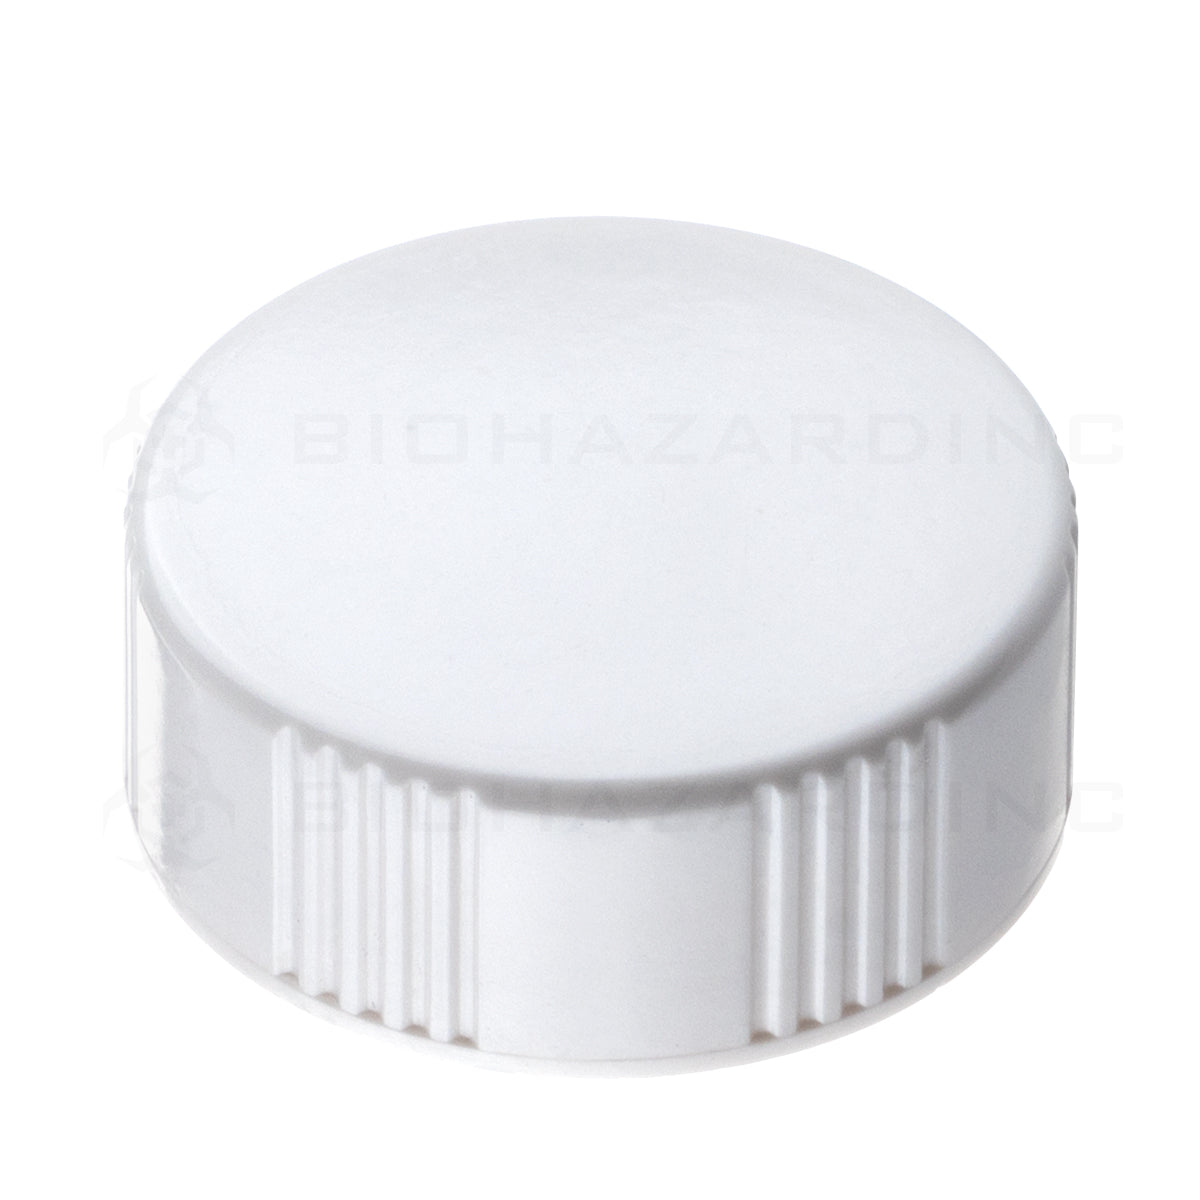 Child Resistant | Plastic Caps | 28mm - Gloss White - 126 Count Child Resistant Cap Biohazard Inc   